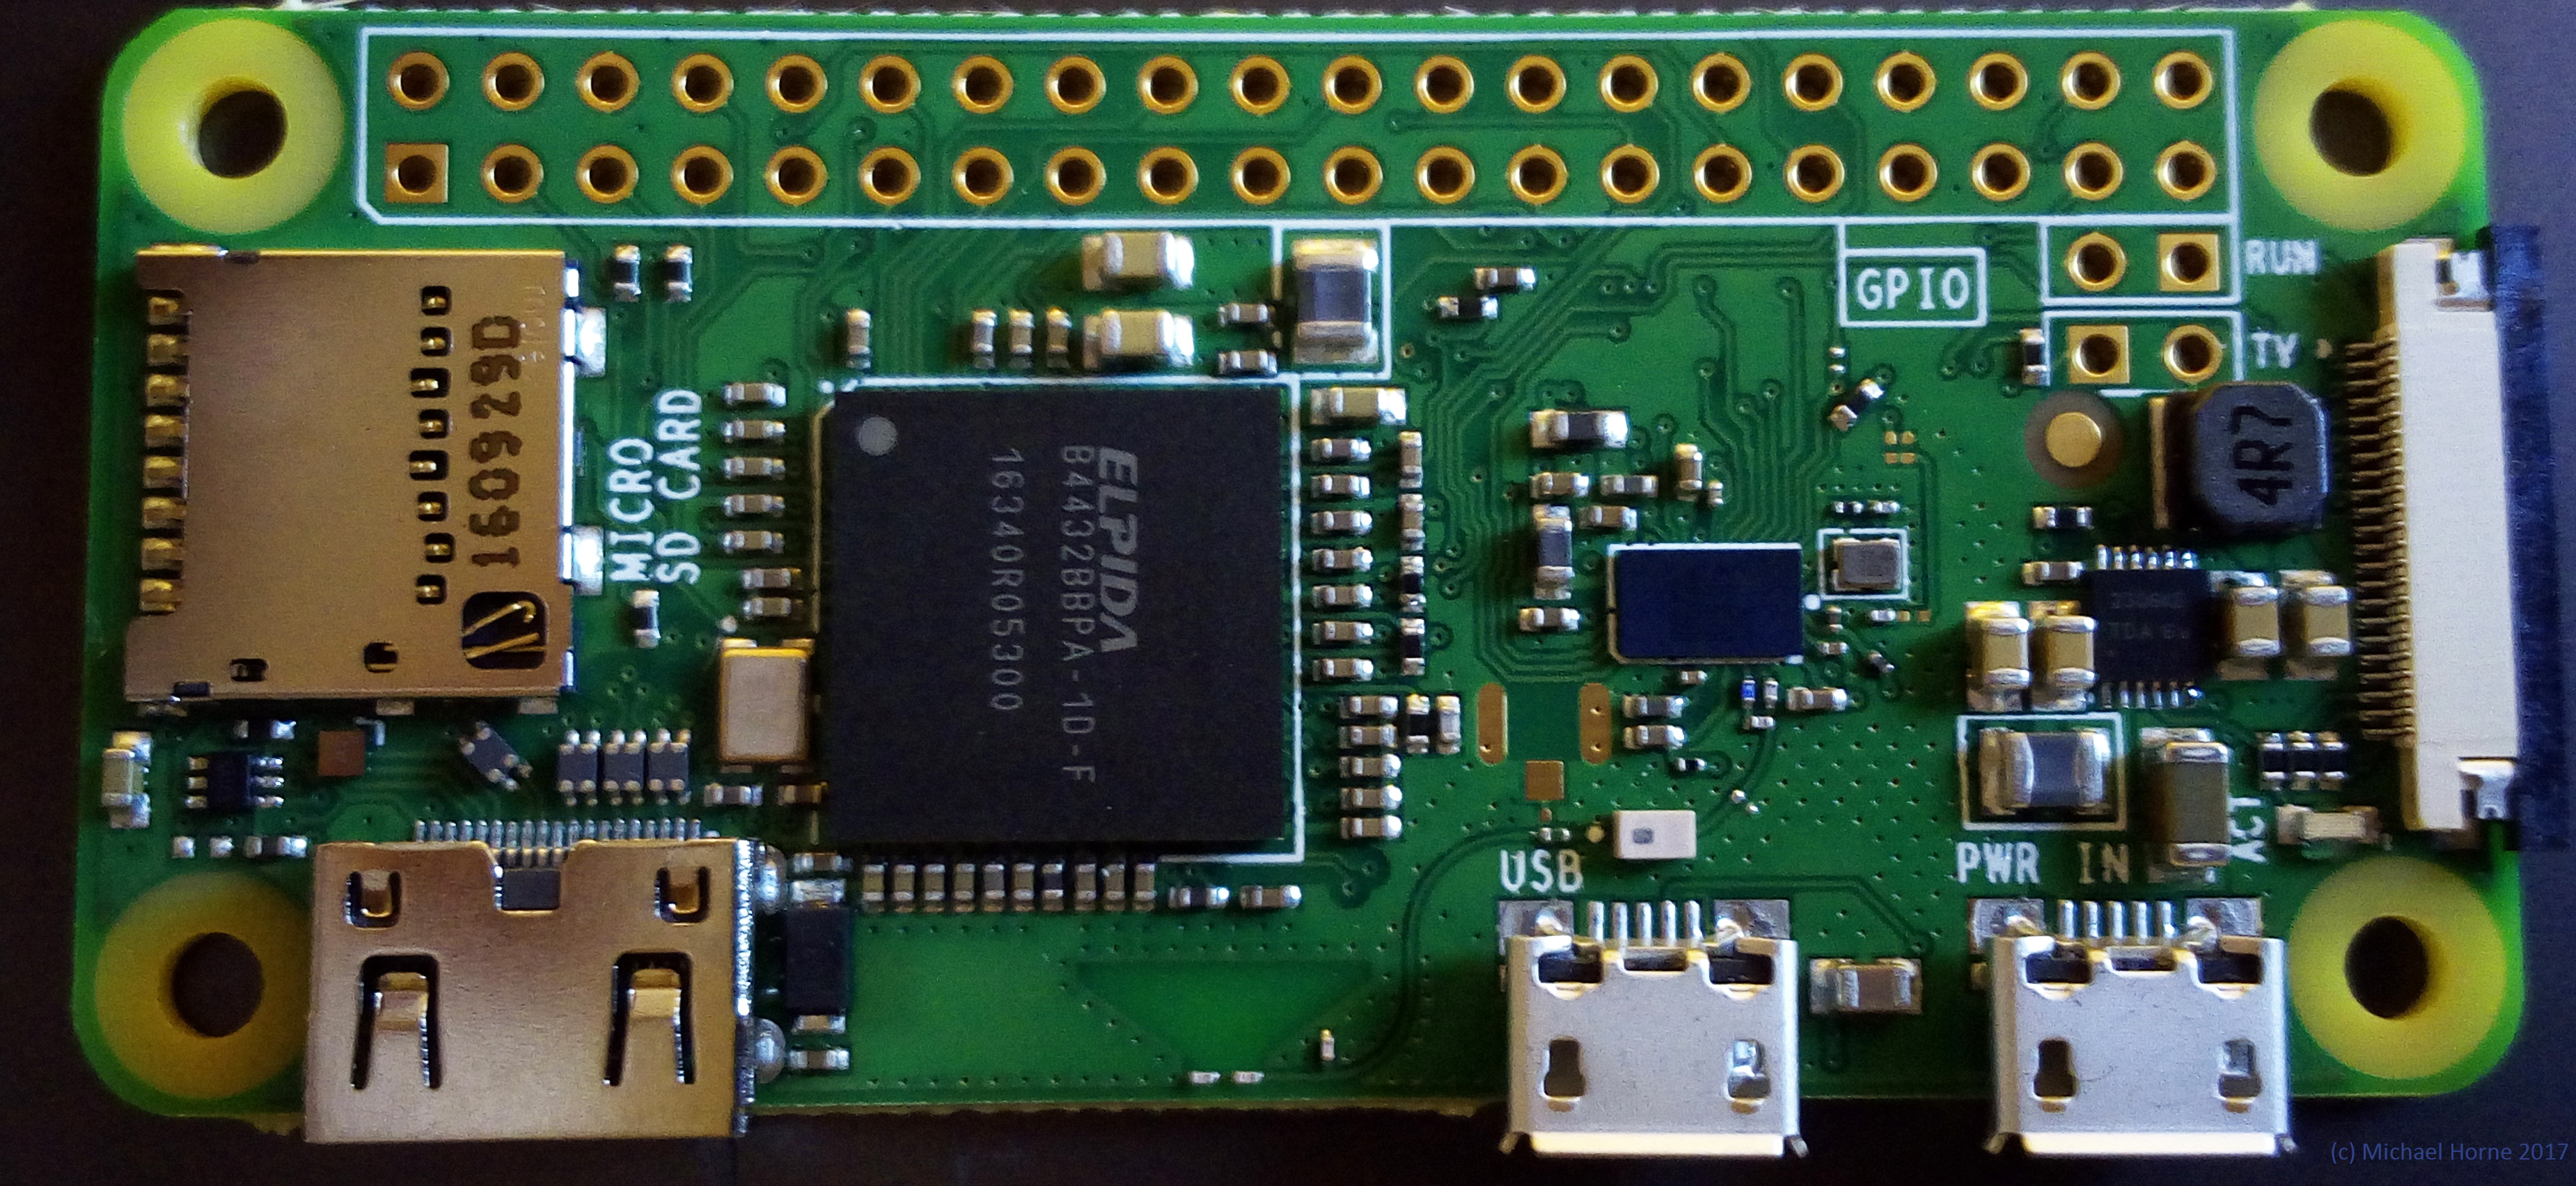 Raspberry Pi Zero Gets A Wifi And Bluetooth Update A New Case